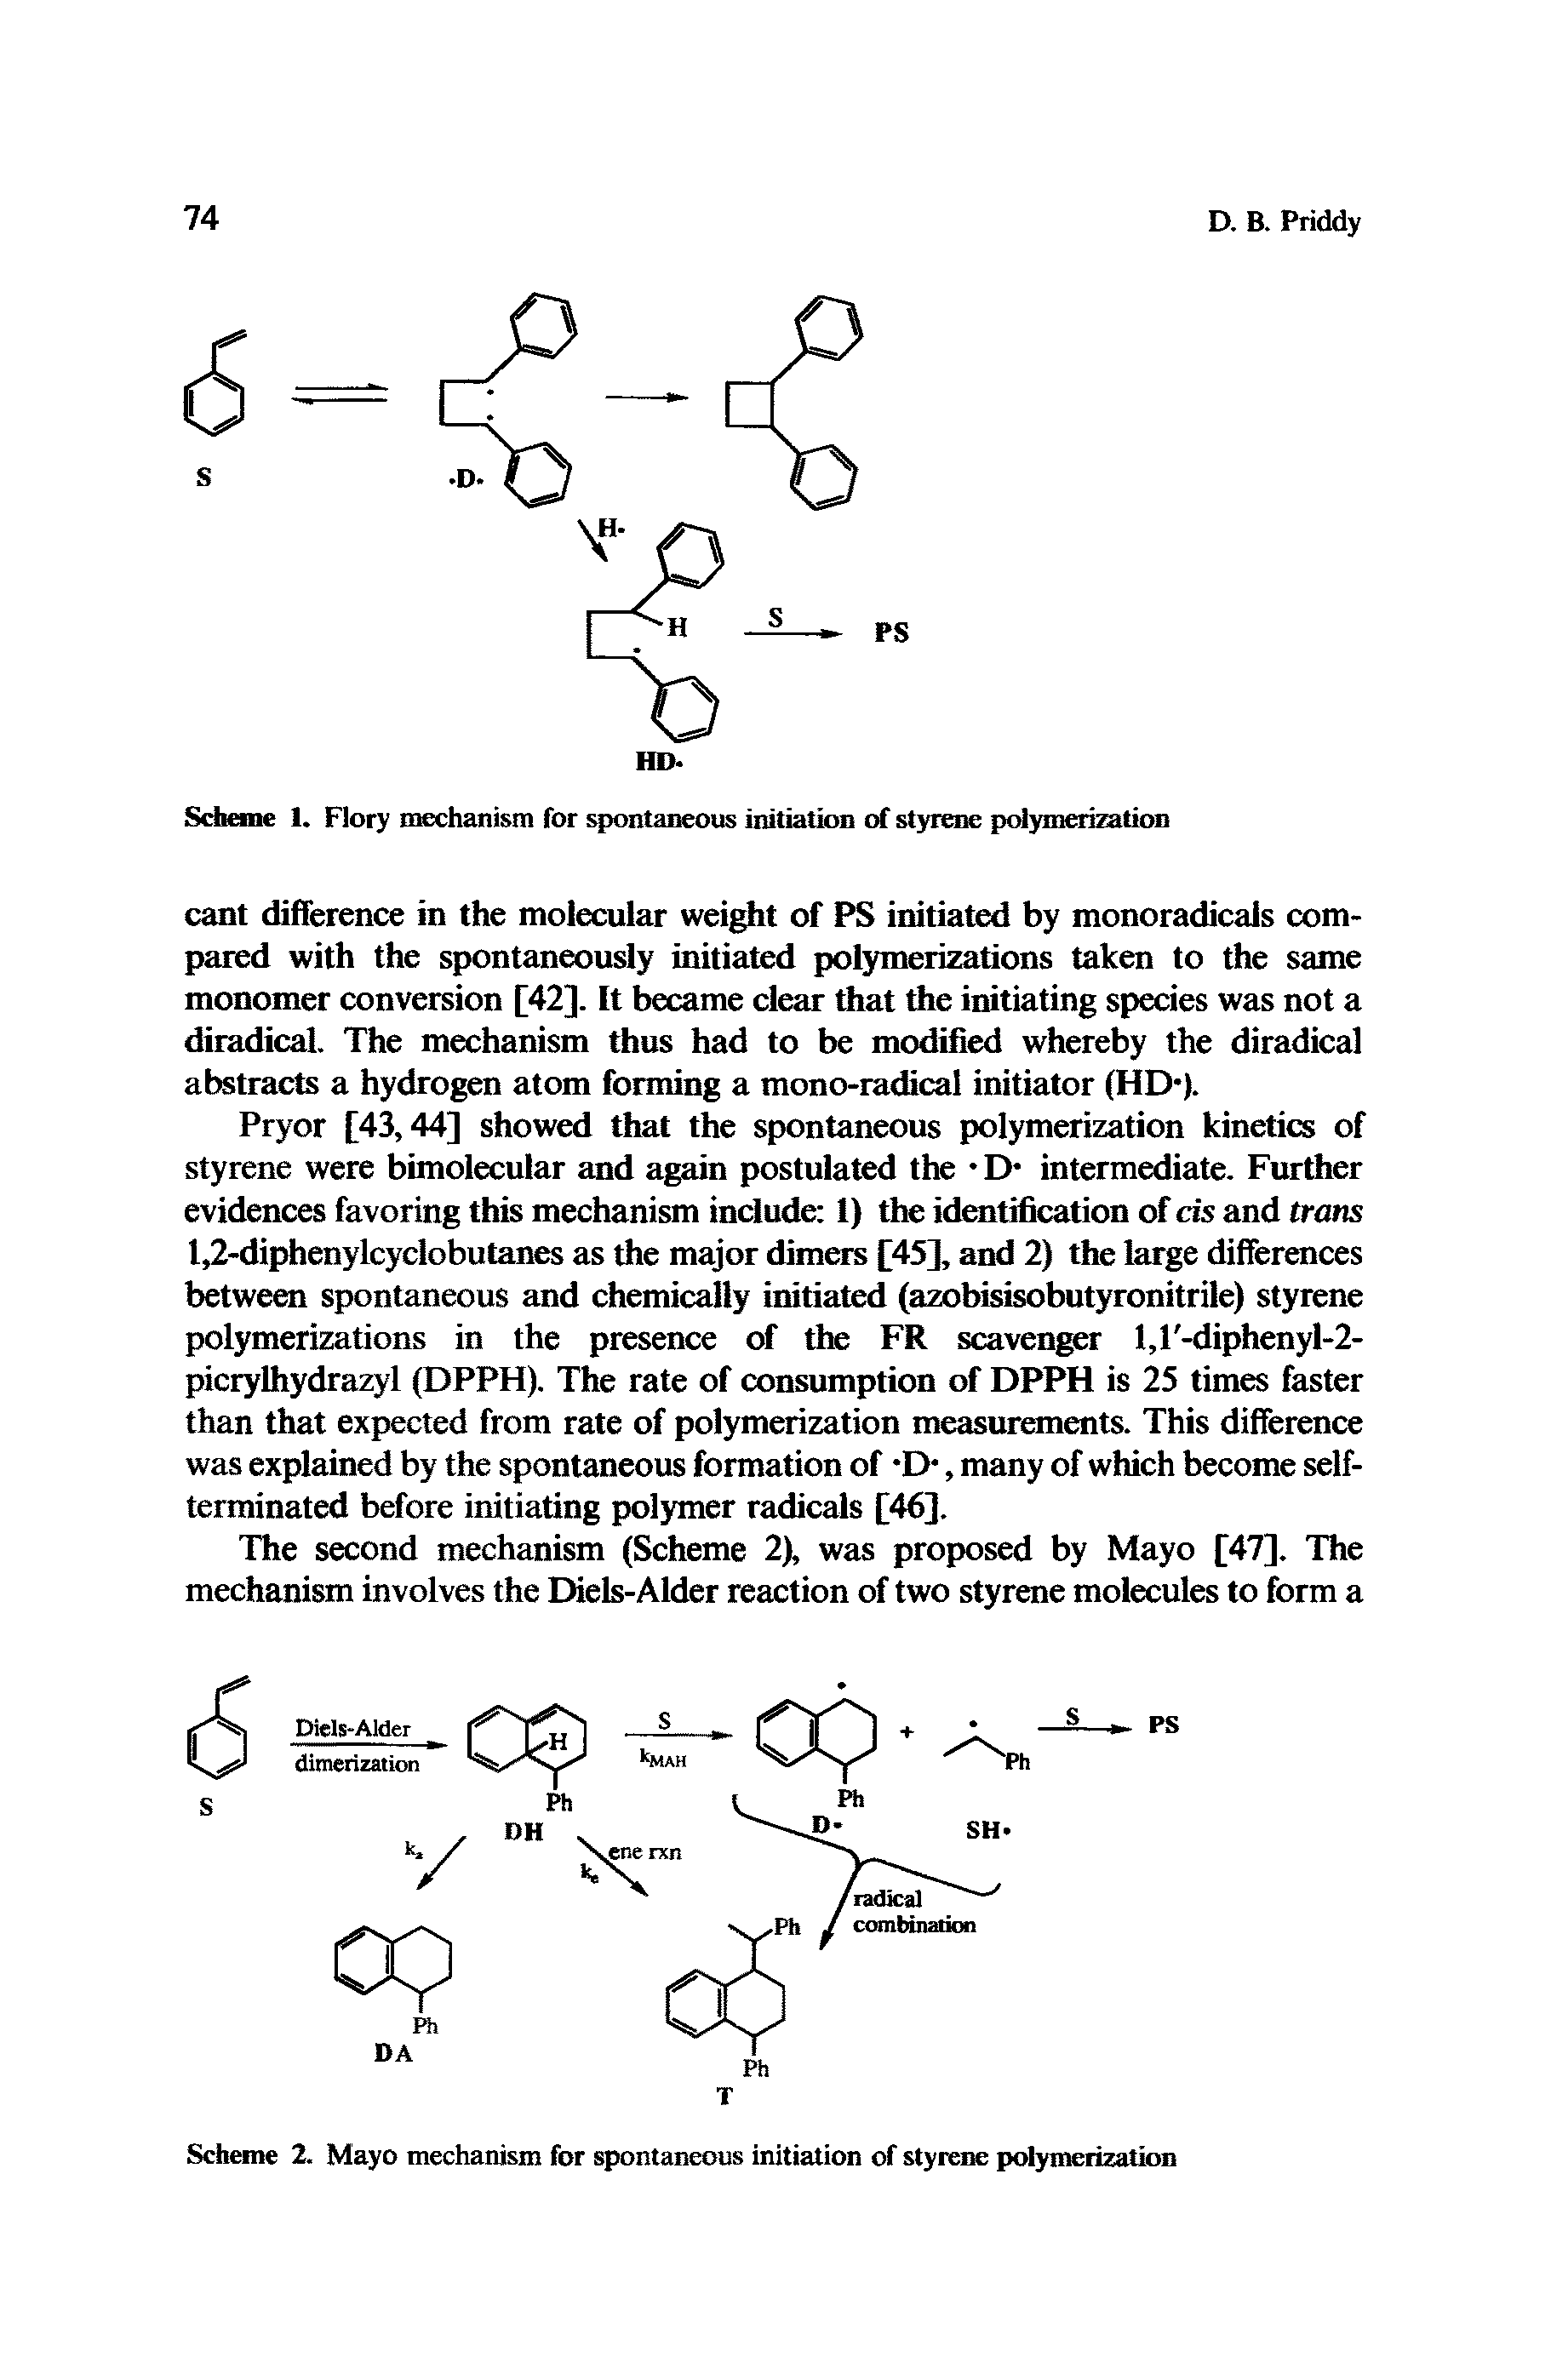 Scheme 1. Flory nrechanism for spontaneous initiation of styrene polymerization...